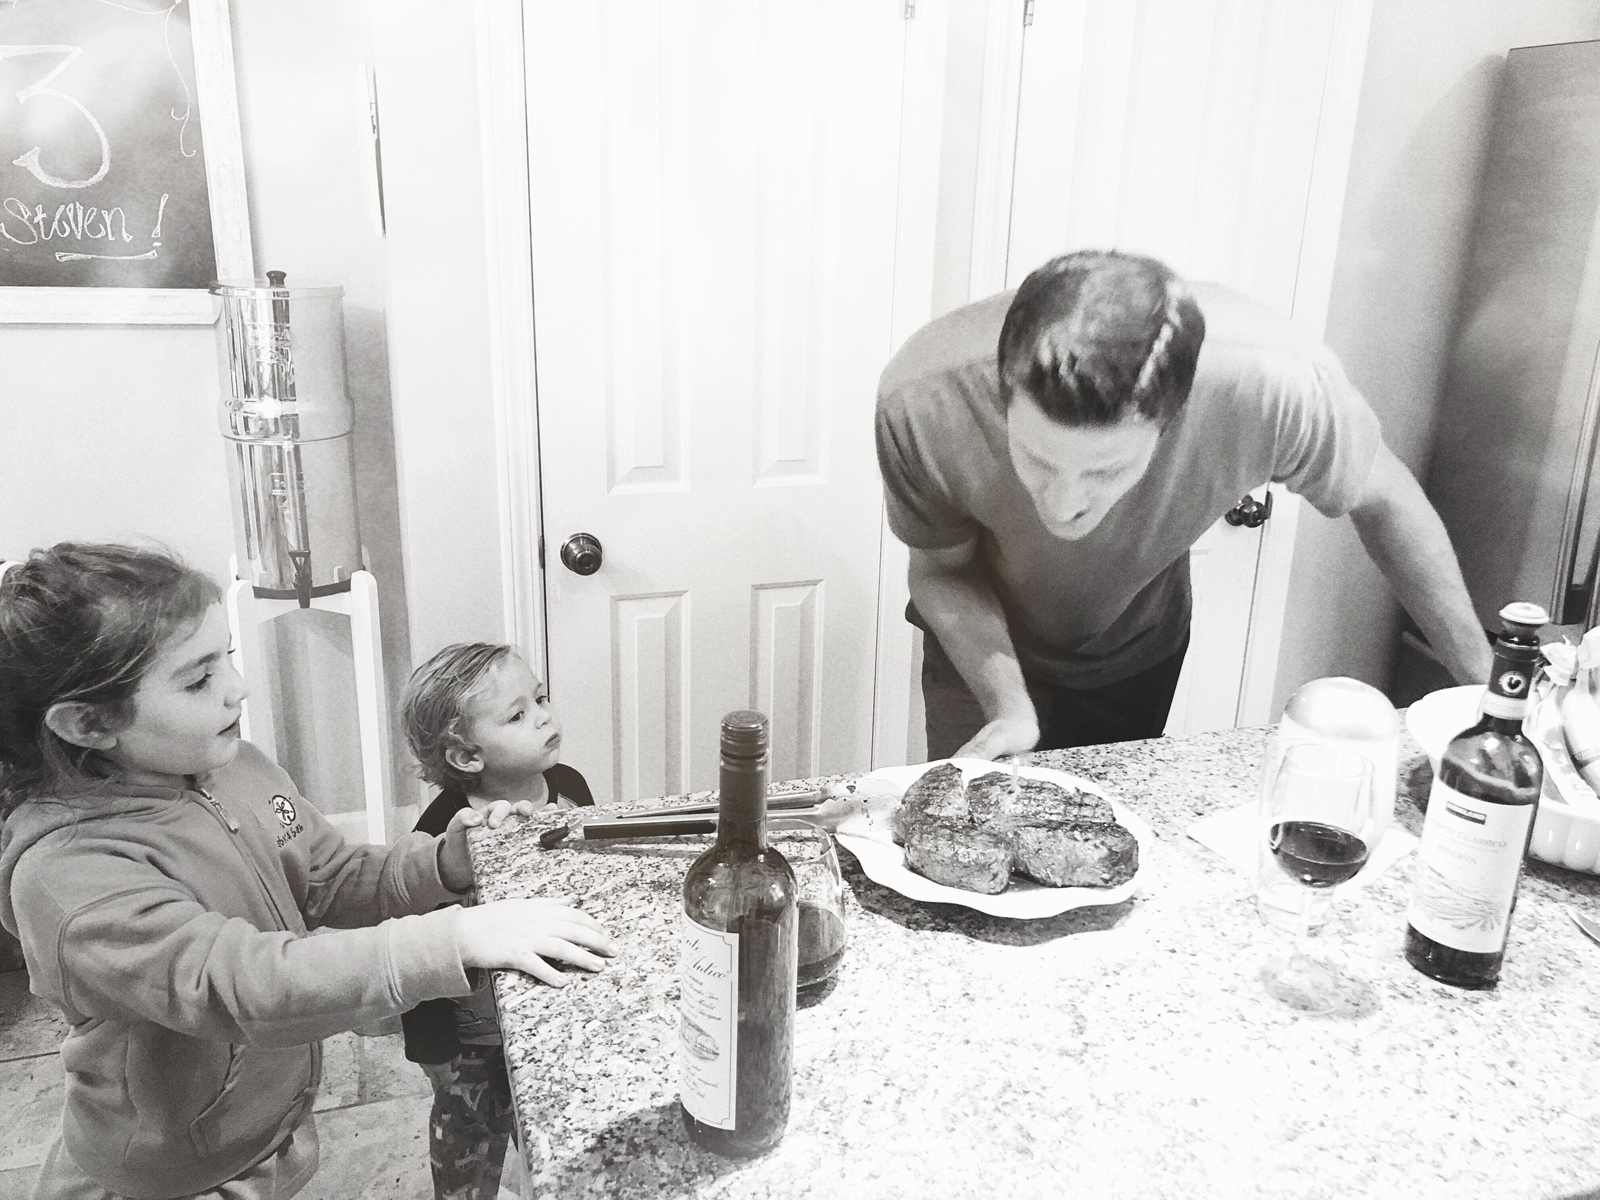 meat candles & ed sheeran with chianti… happy birthday, last week, SRB!